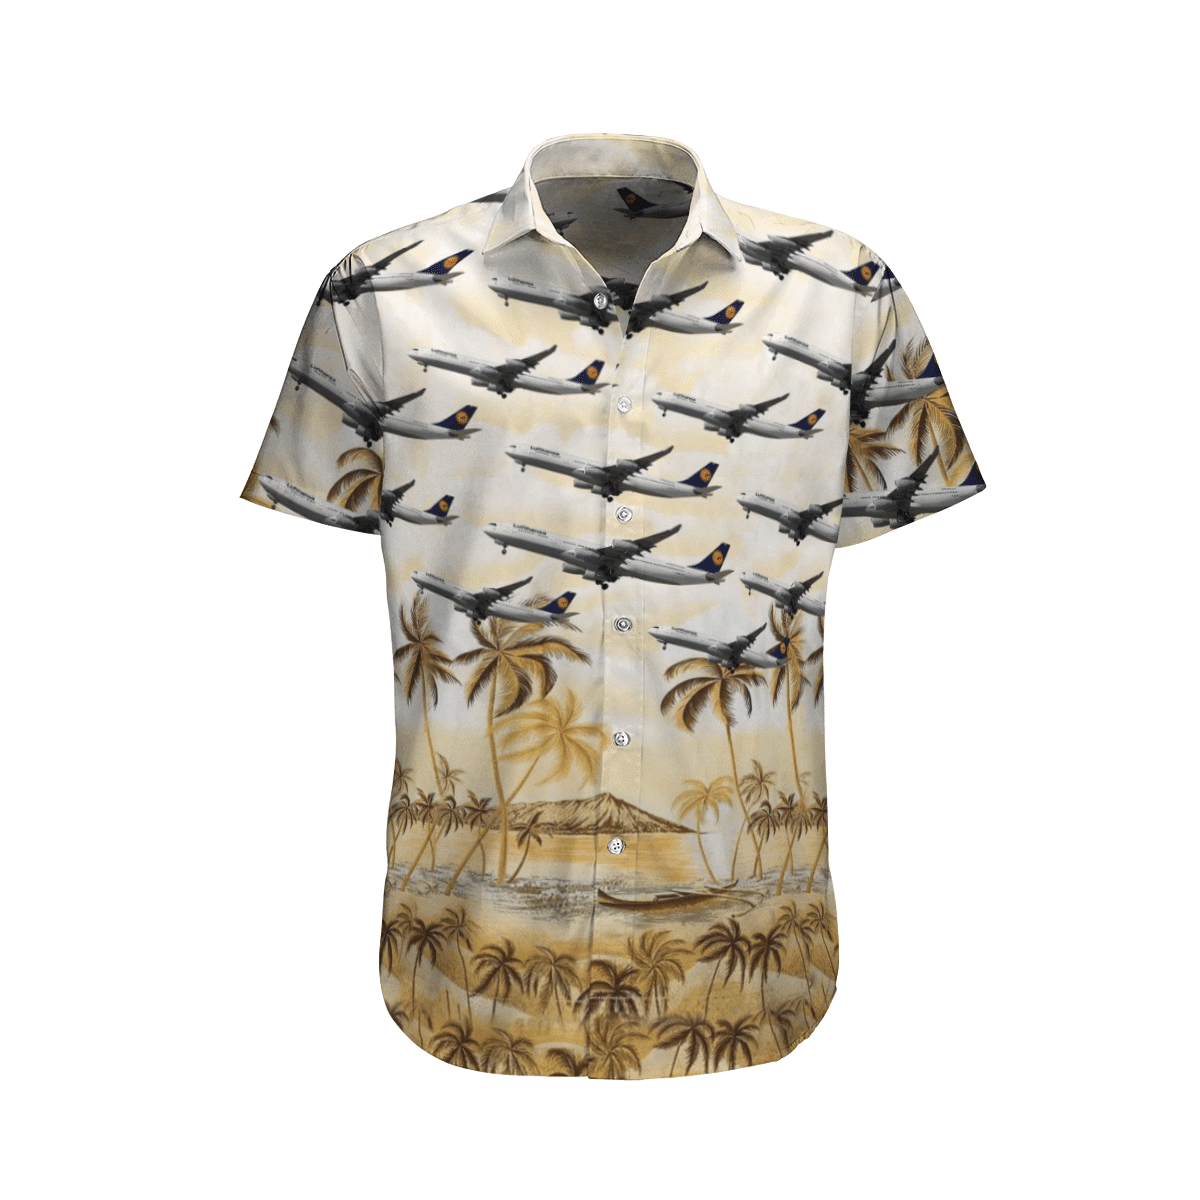 Enjoy your summer with top cool hawaiian shirt below 187